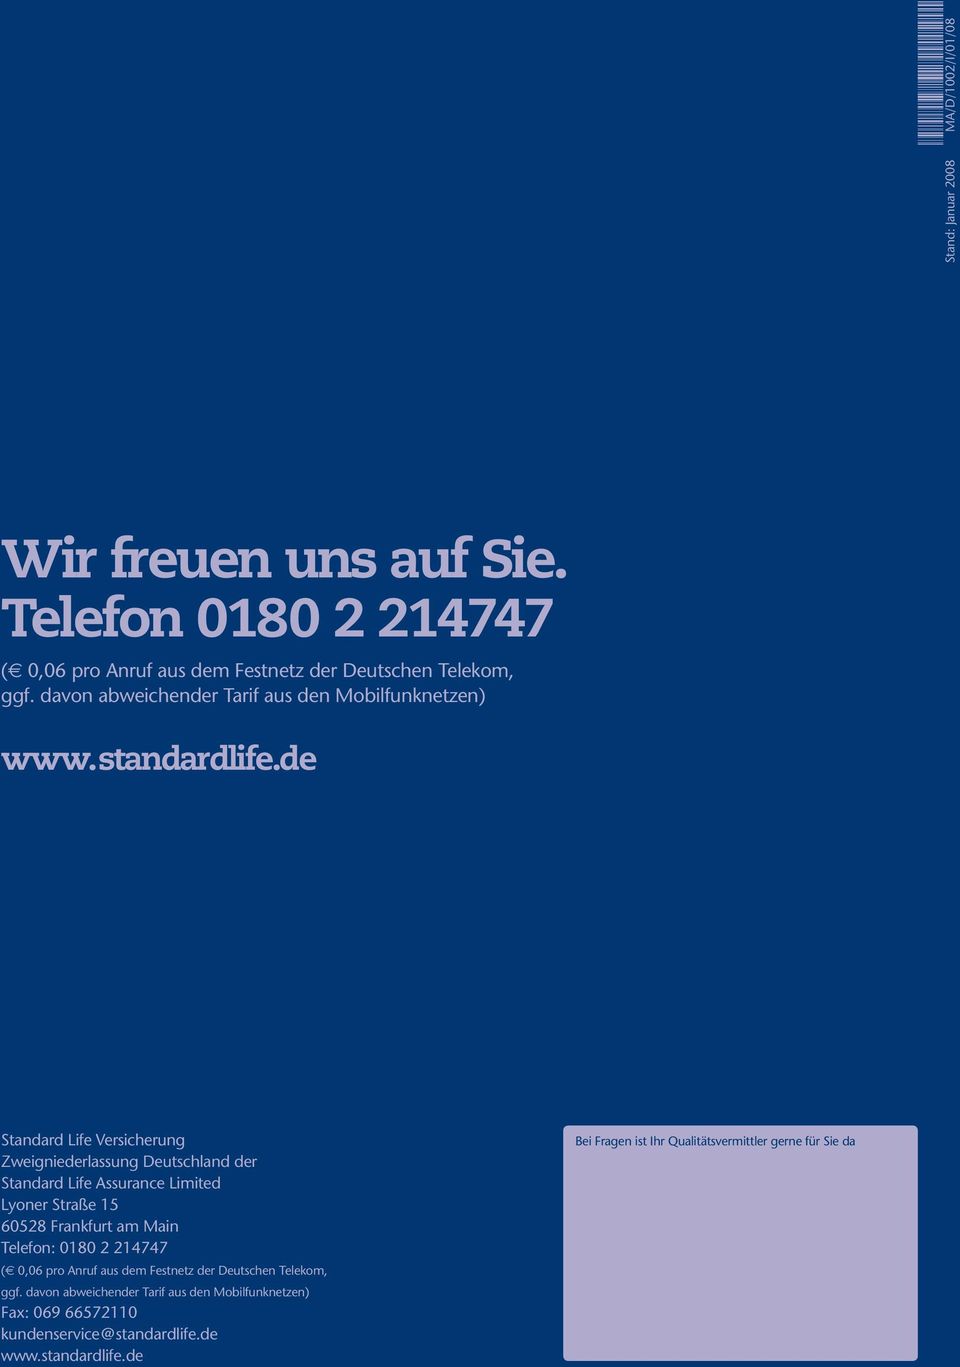 de Standard Life Versicherung Zweigniederlassung Deutschland der Standard Life Assurance Limited Lyoner Straße 15 60528 Frankfurt am Main Telefon: 0180